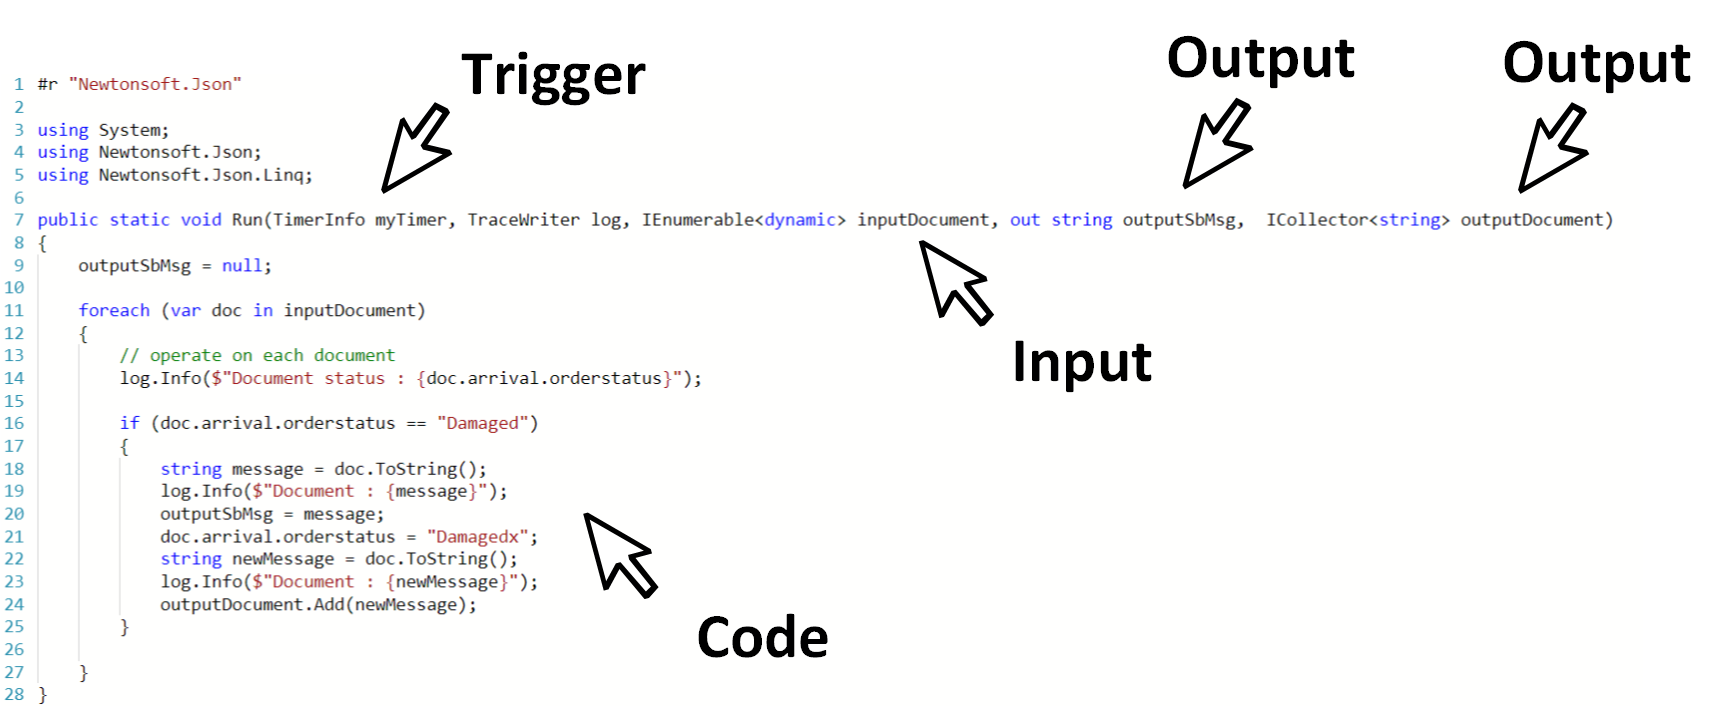 Code concepts